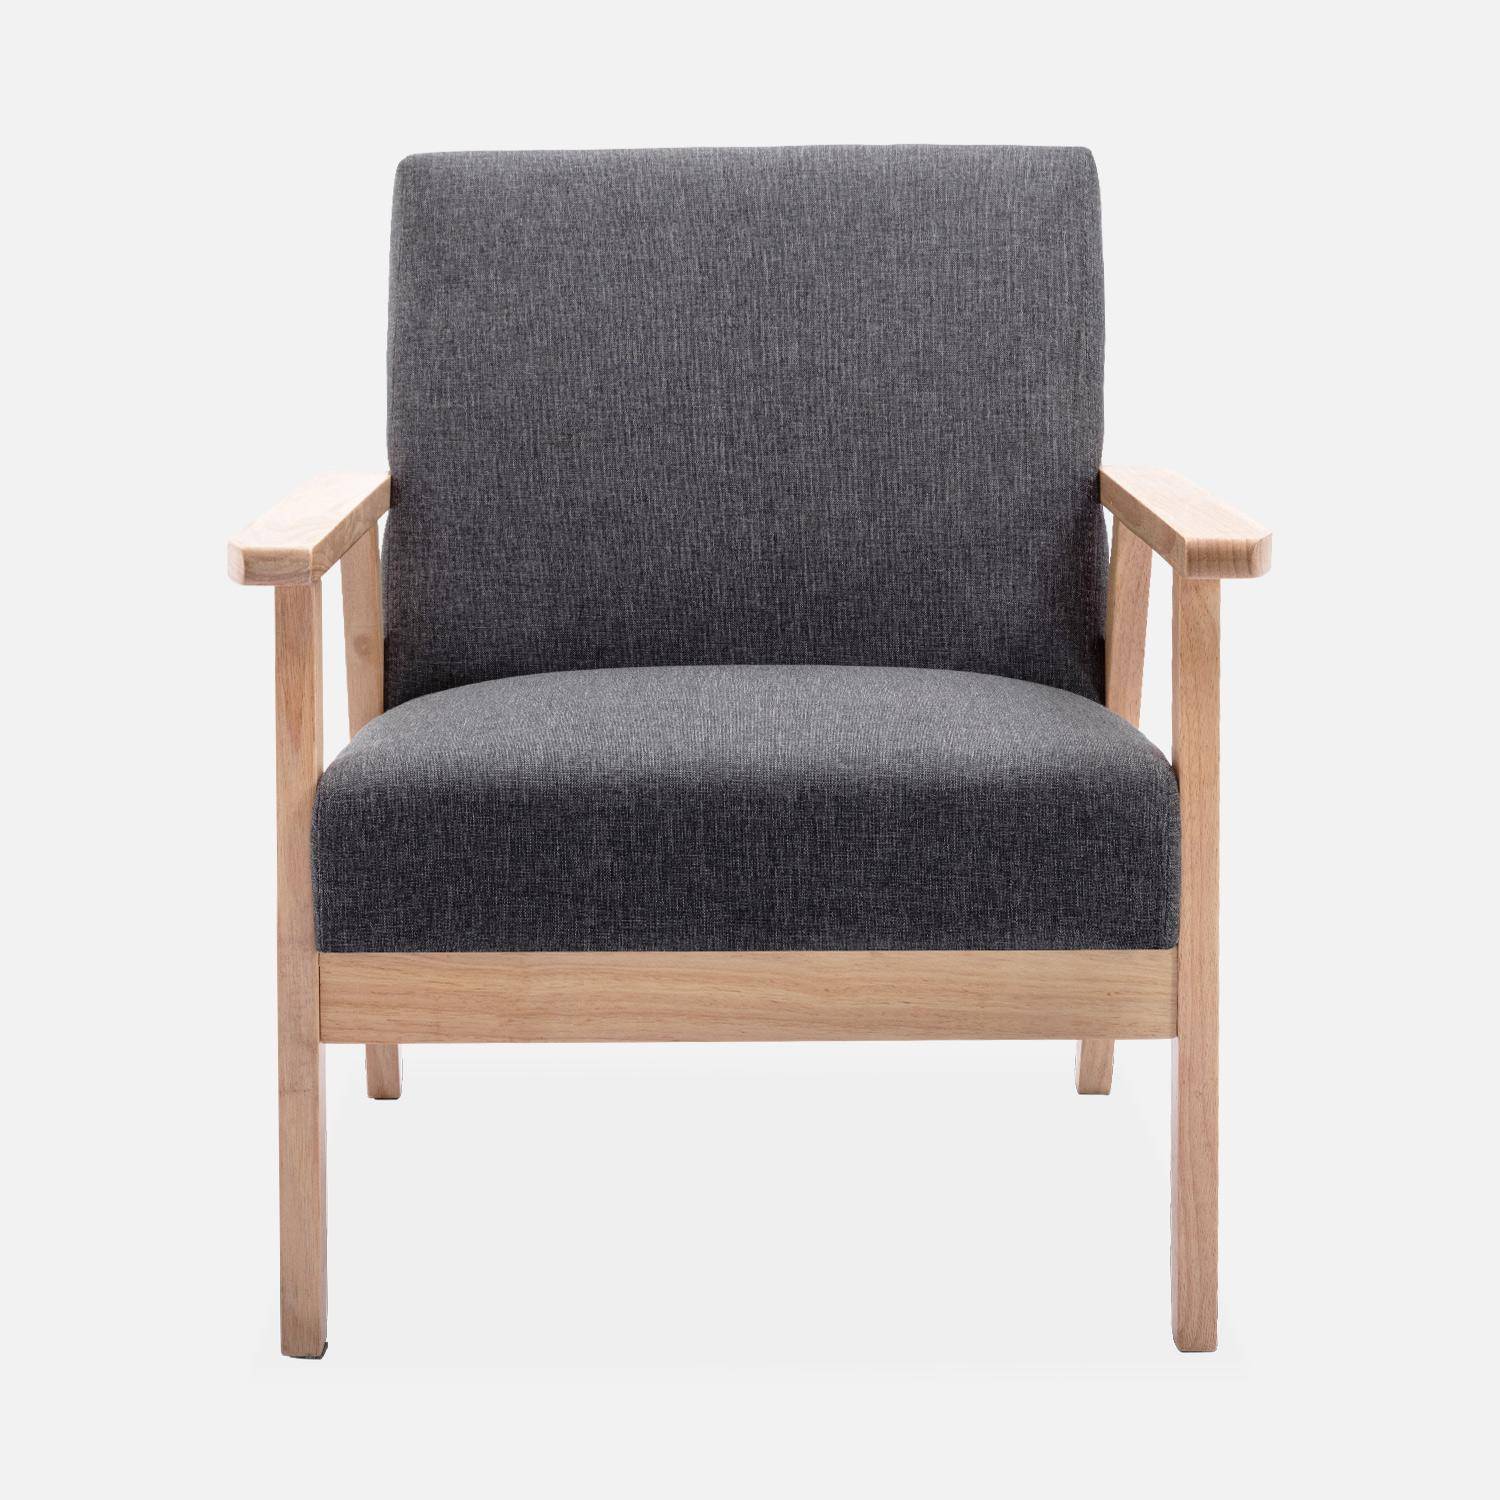 Banco y sillón de madera y tela gris oscuro, Isak, L 114 x A 69,5 x A 73 cm Photo4